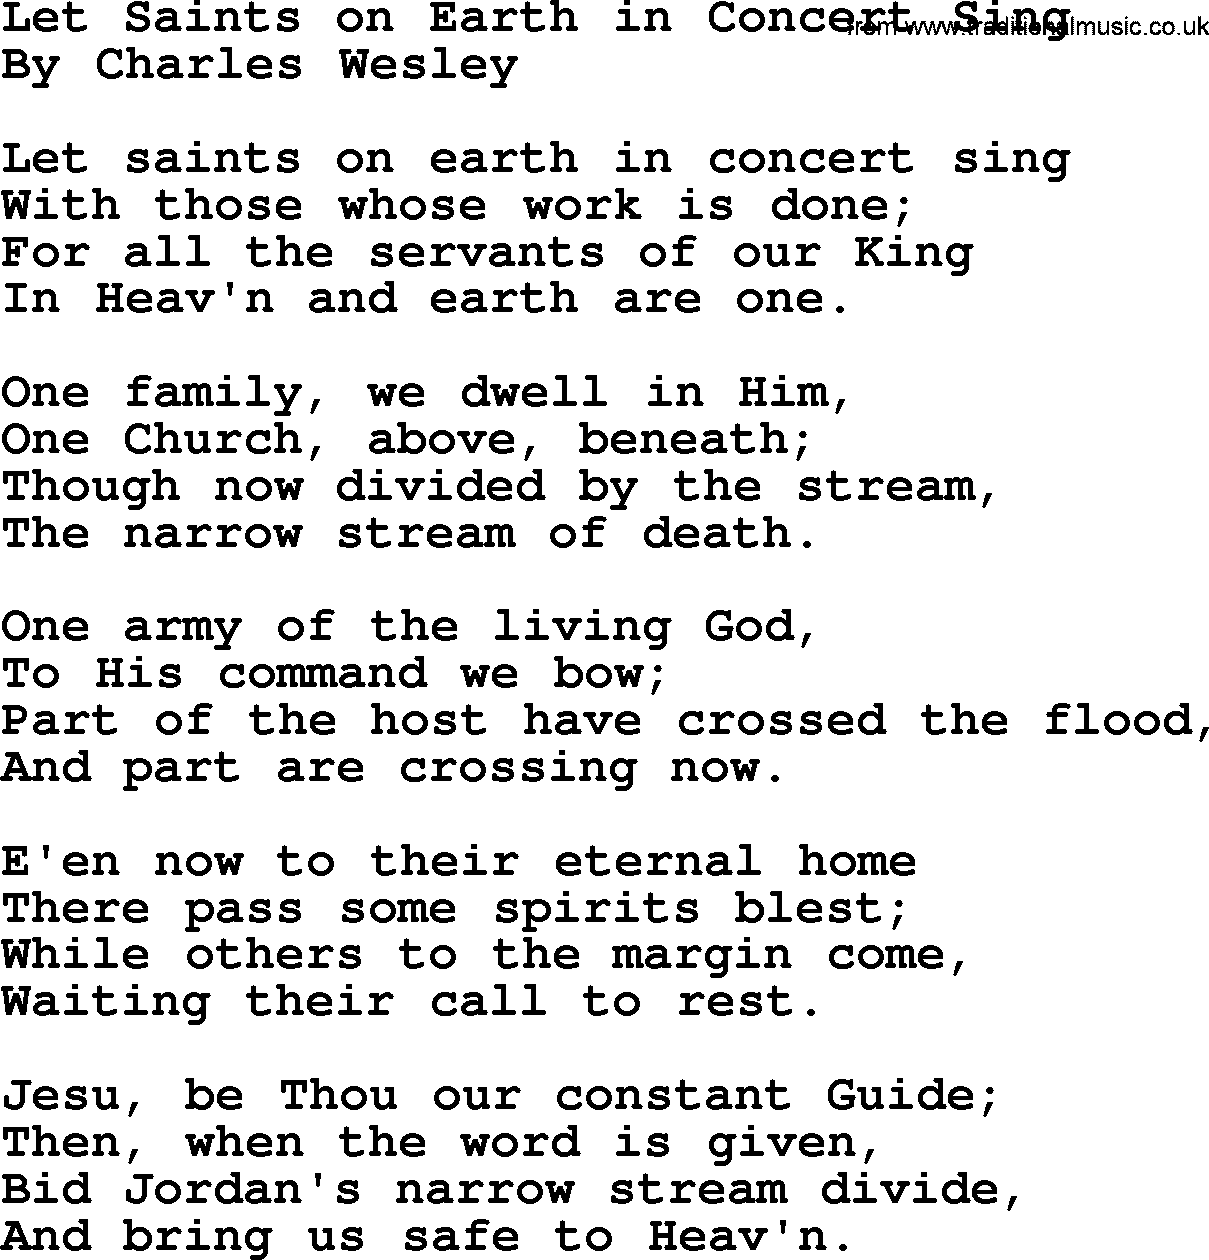 Charles Wesley hymn: Let Saints on Earth in Concert Sing, lyrics